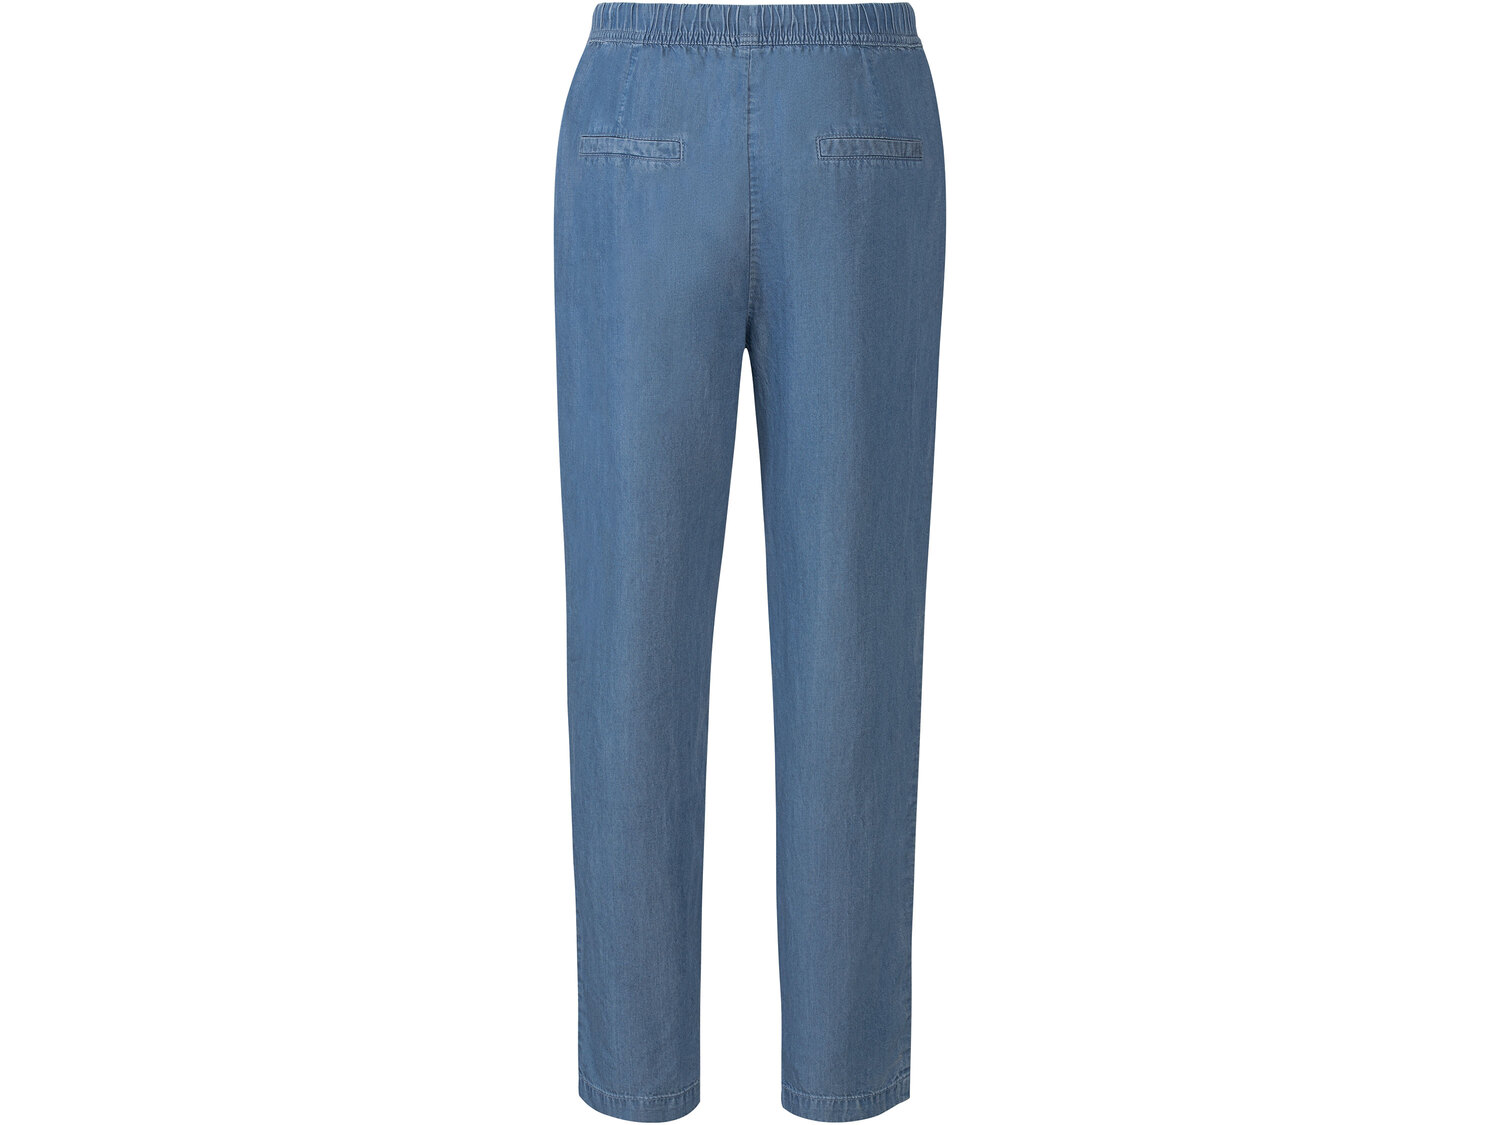 Spodnie damskie z lyocellu Esmara, cena 39,99 PLN 
- rozmiary: 36-46
- 100% lyocellu ...